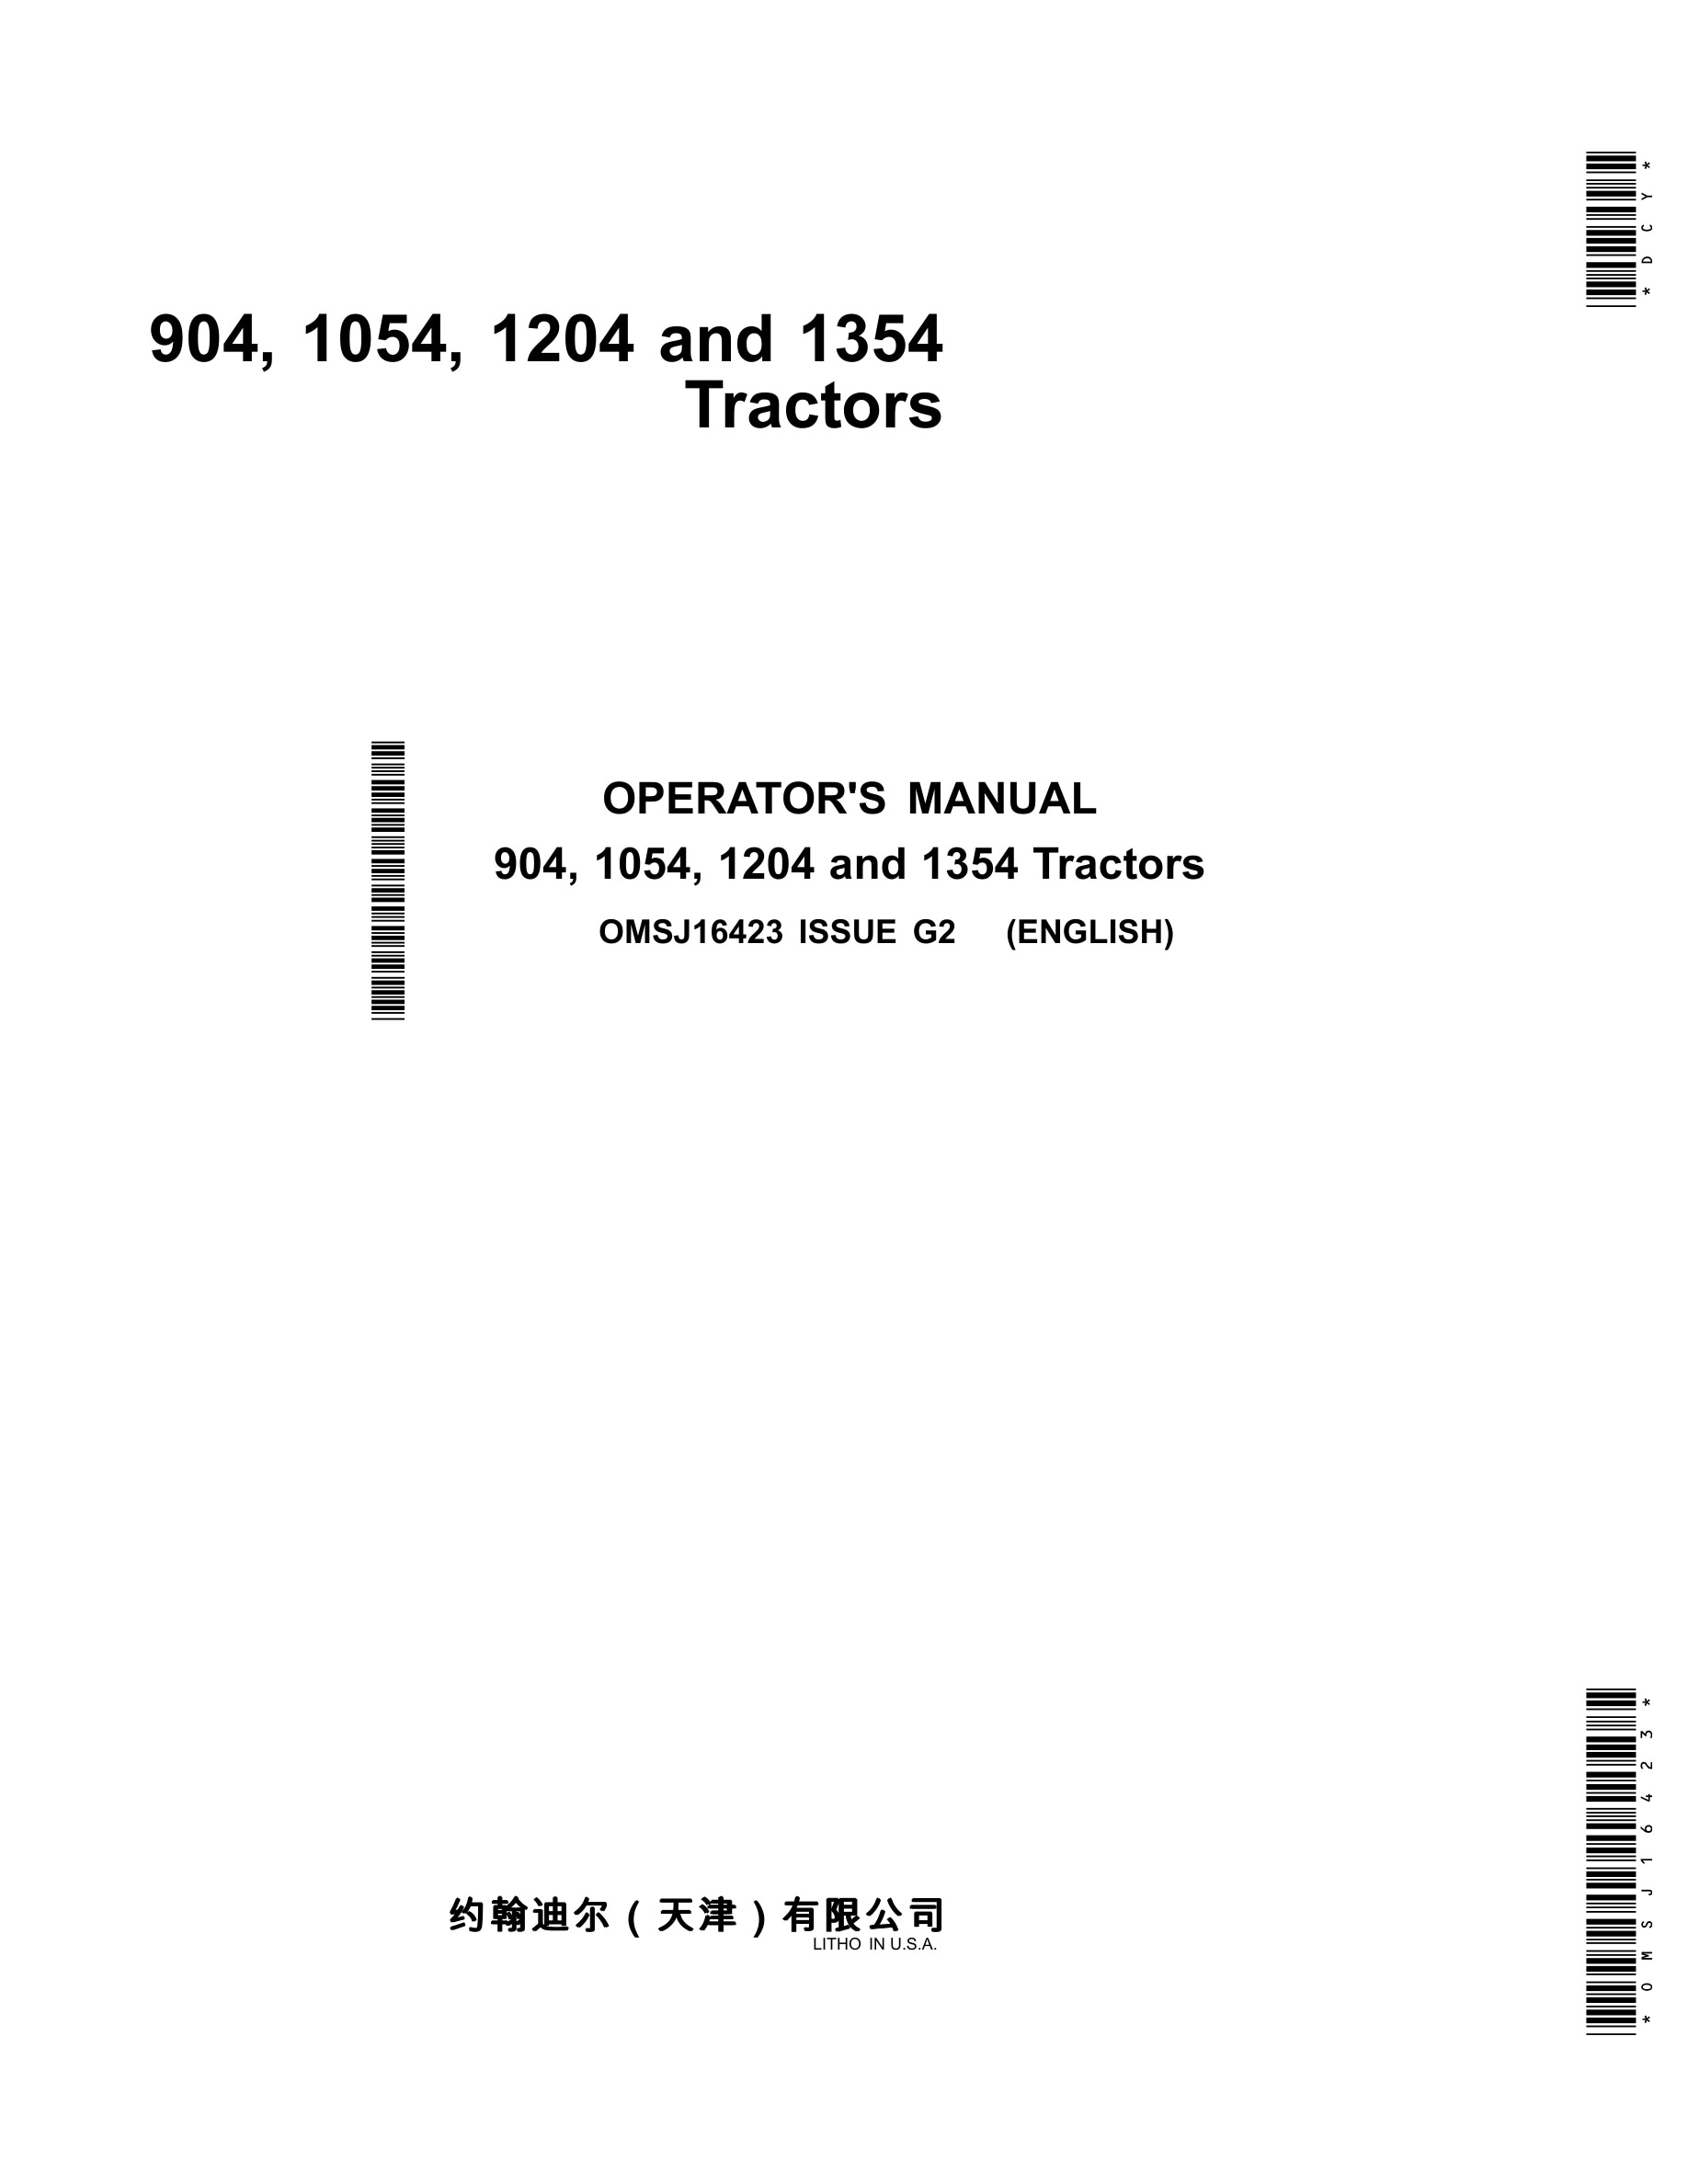 John Deere 904, 1054, 1204 And 1354 Tractors Operator Manuals OMSJ16423-1